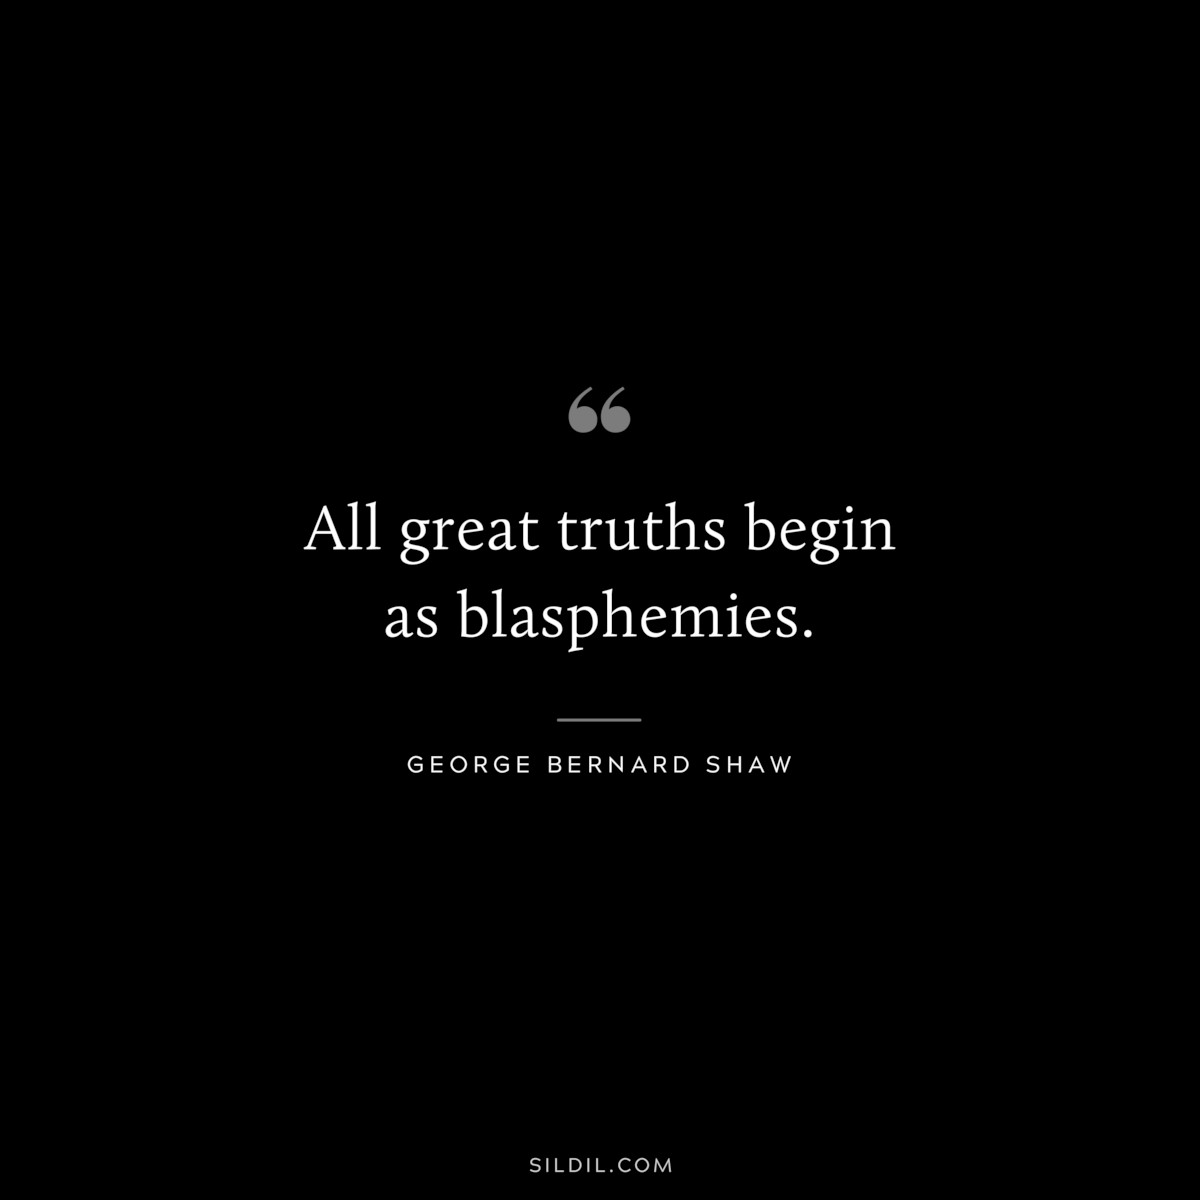 All great truths begin as blasphemies. ― George Bernard Shaw